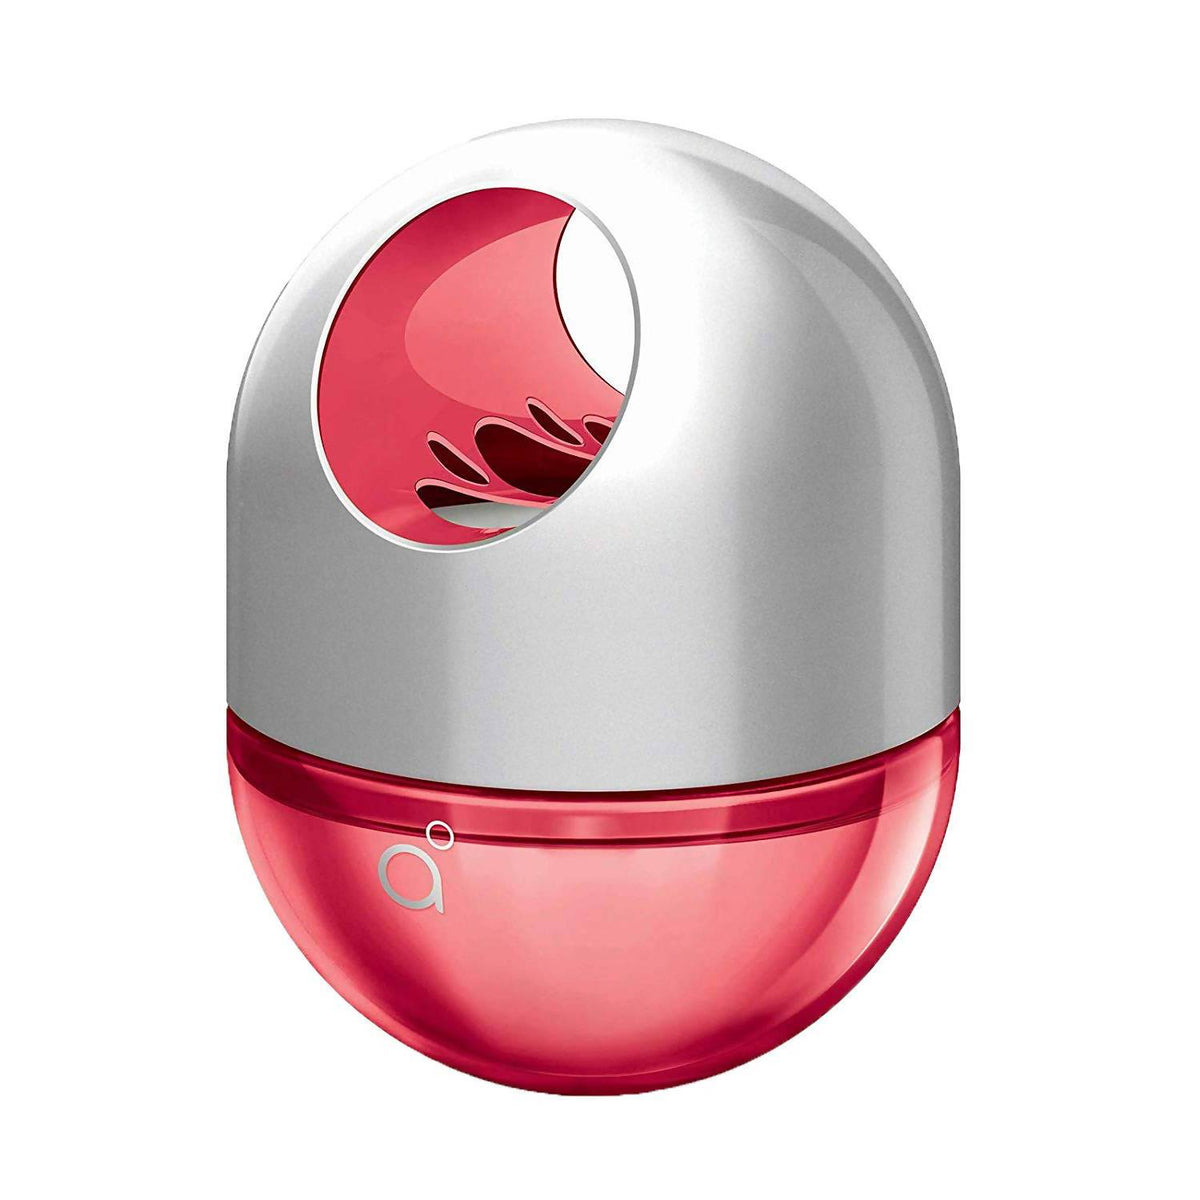 Godrej aer twist, Car Air Freshener - Petal Crush Pink (45g)